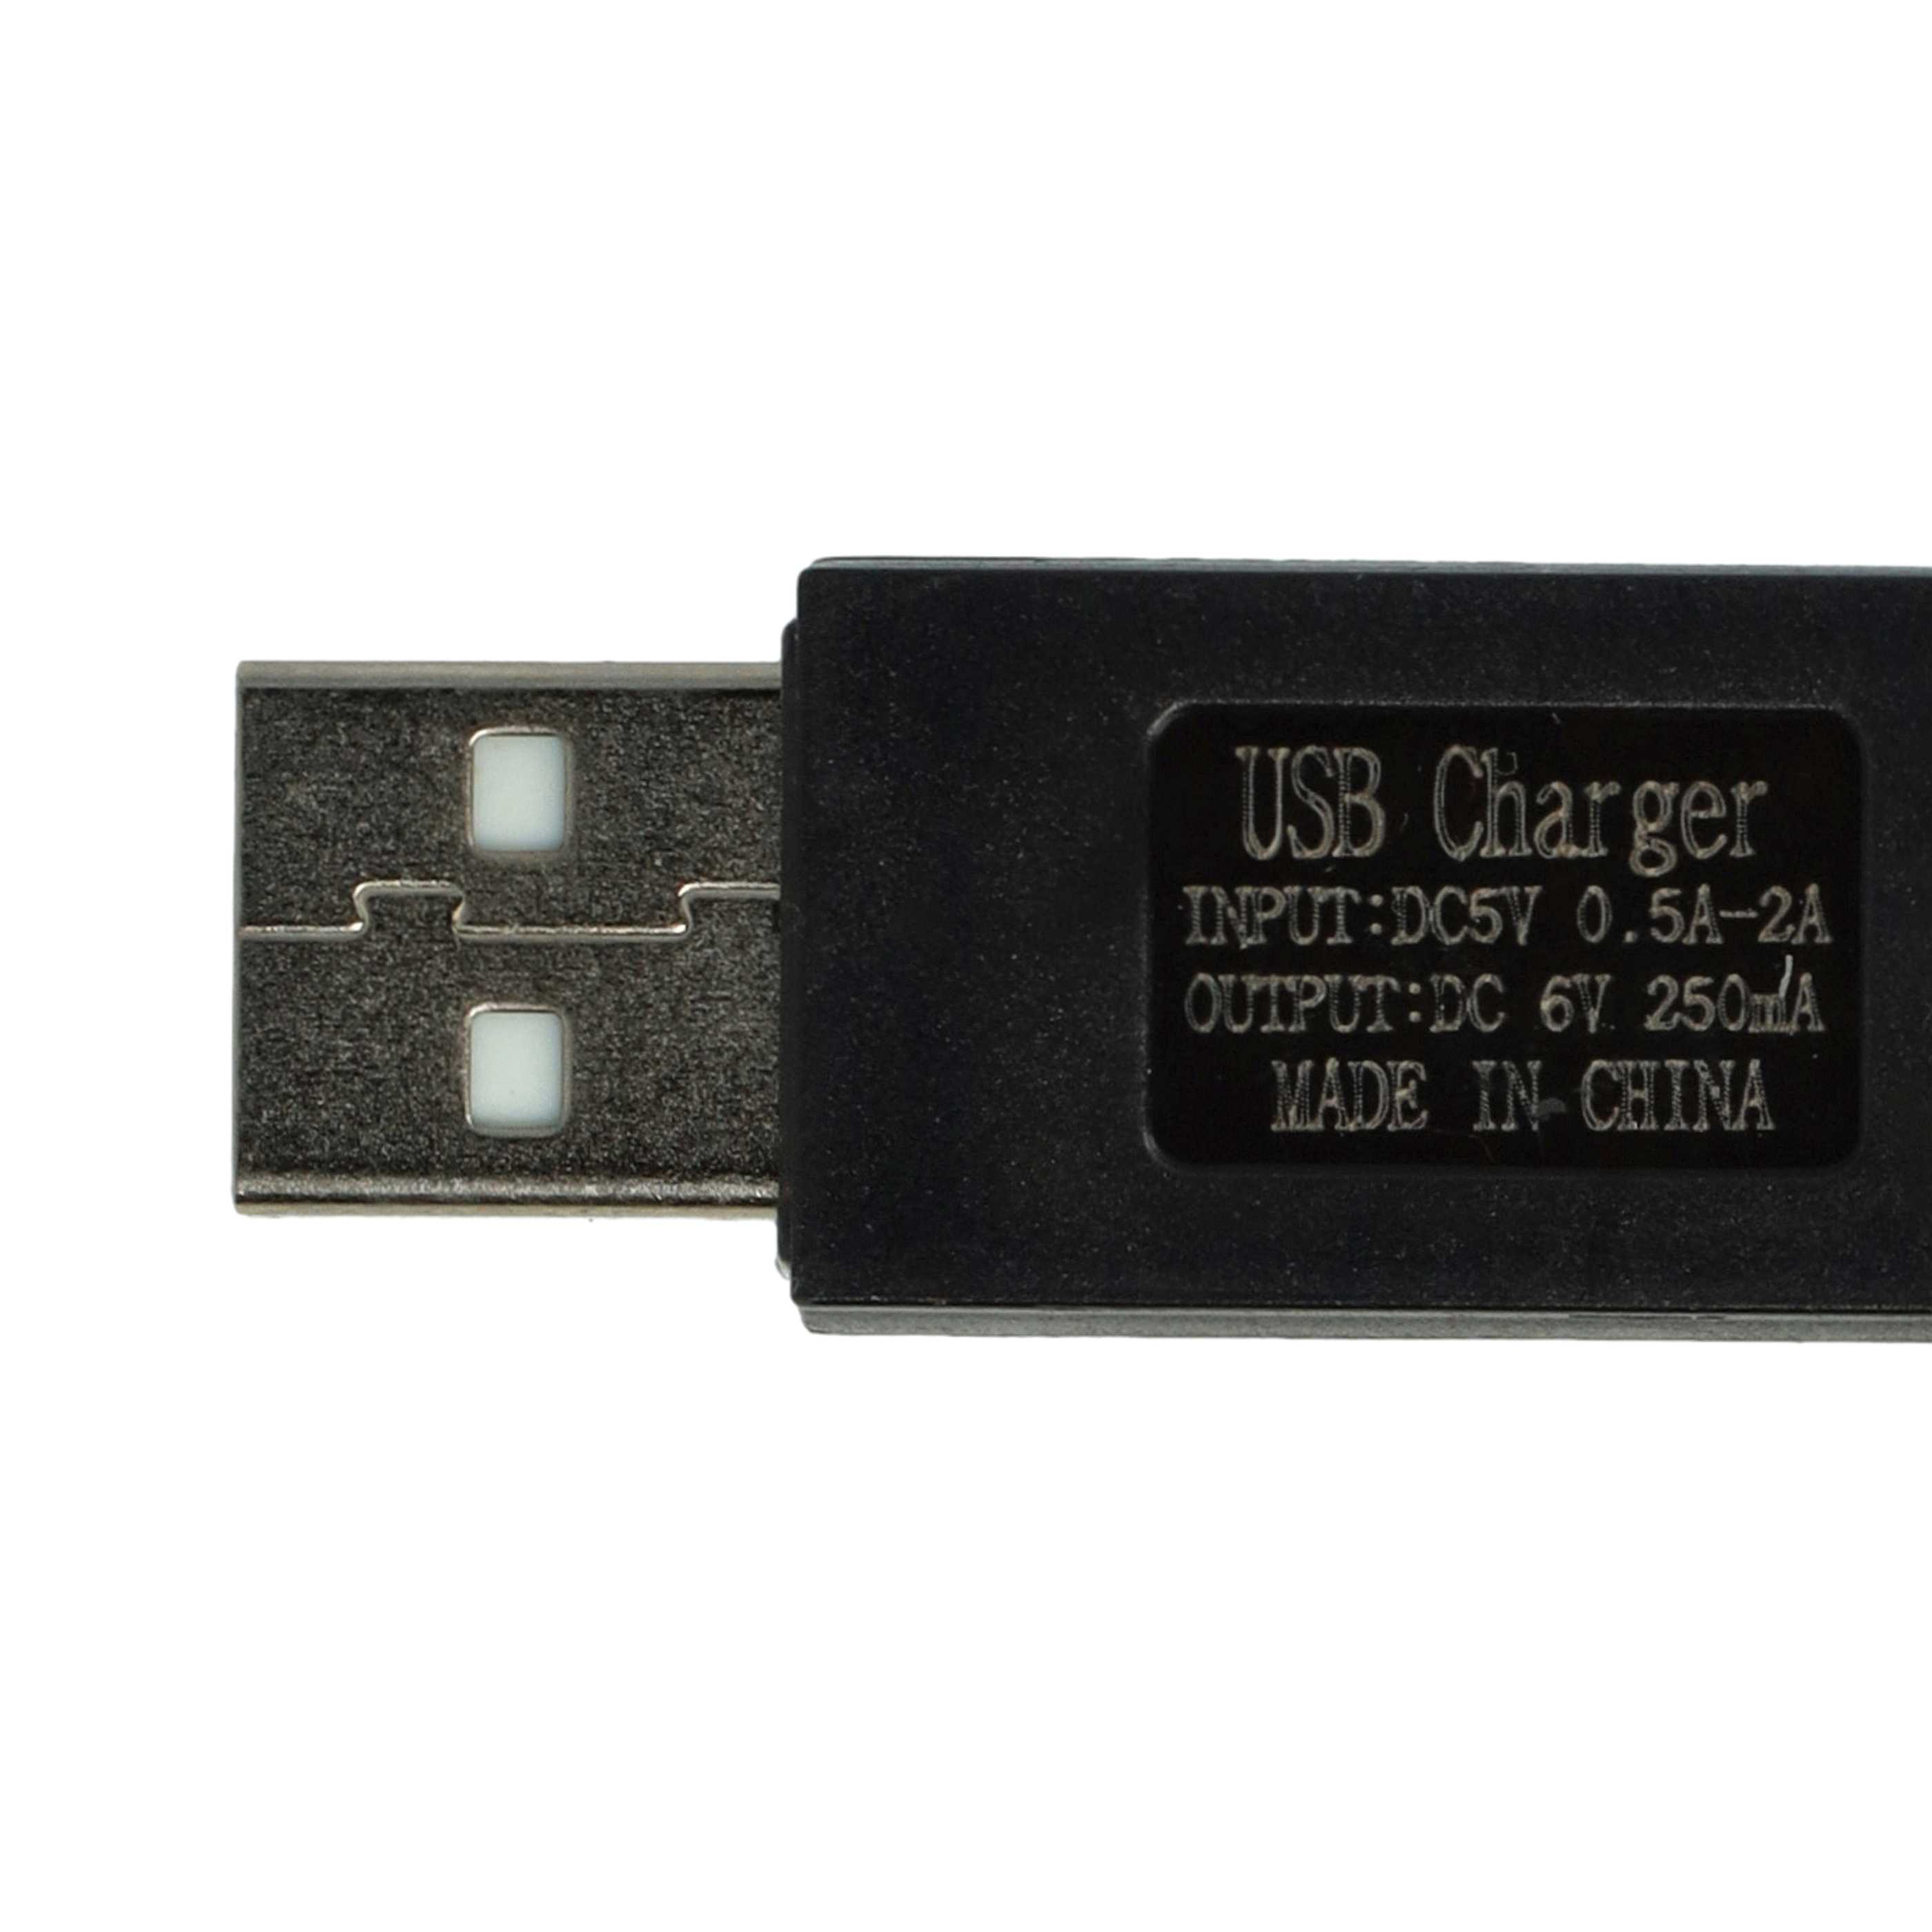 USB-Ladekabel passend für RC-Akkus mit JST-Anschluss, RC-Modellbau Akkupacks - 60cm 6V